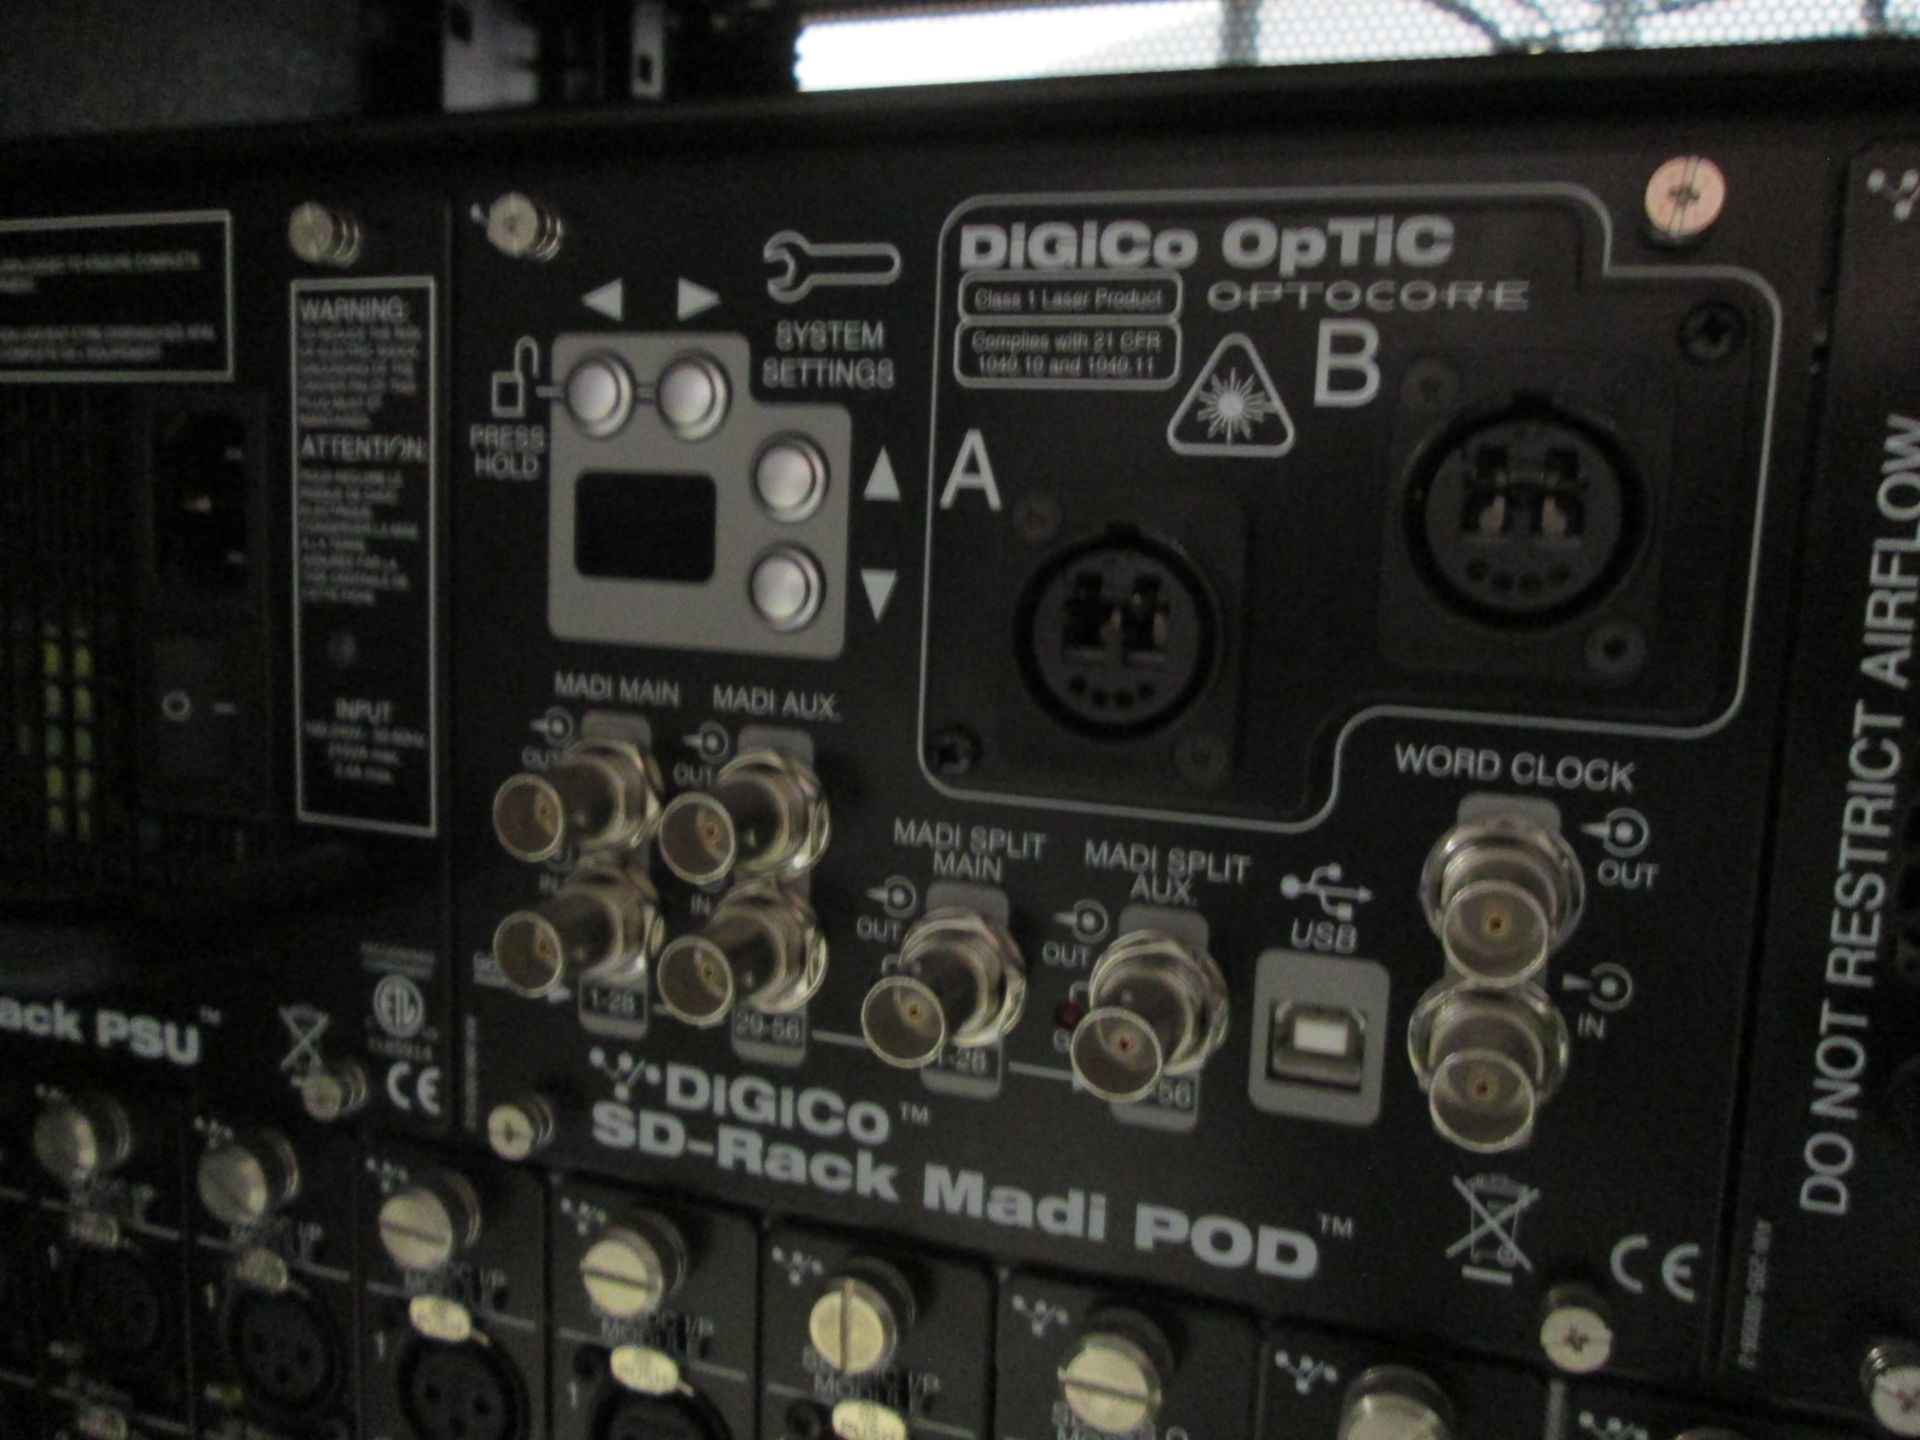 DigiCo 192 kHz SD-Rack Digital Input / Output Frame. S/N 773138 1712 - Image 7 of 8